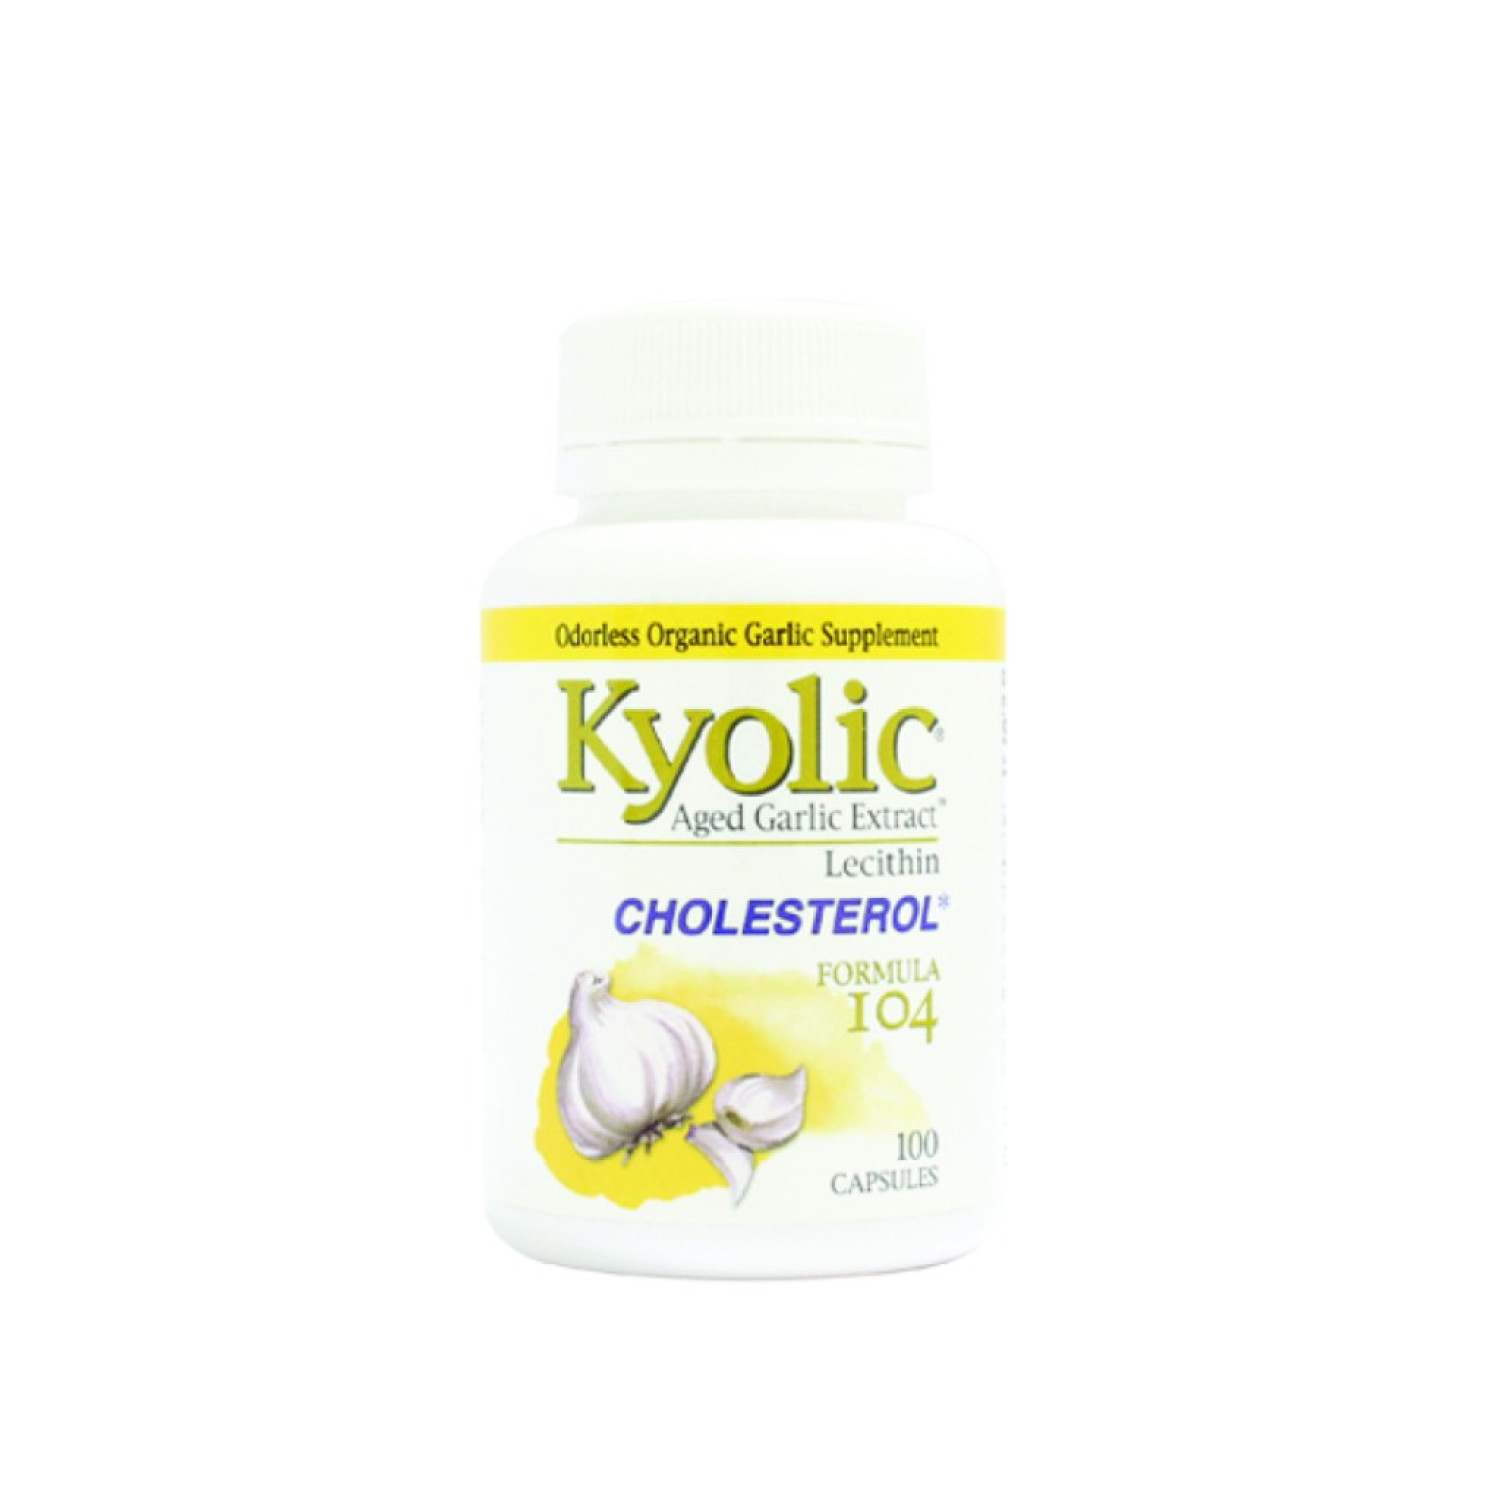 kyolic-104-cholesterol-plus-lecithin-100-capsules-6543538c32d7c.jpeg